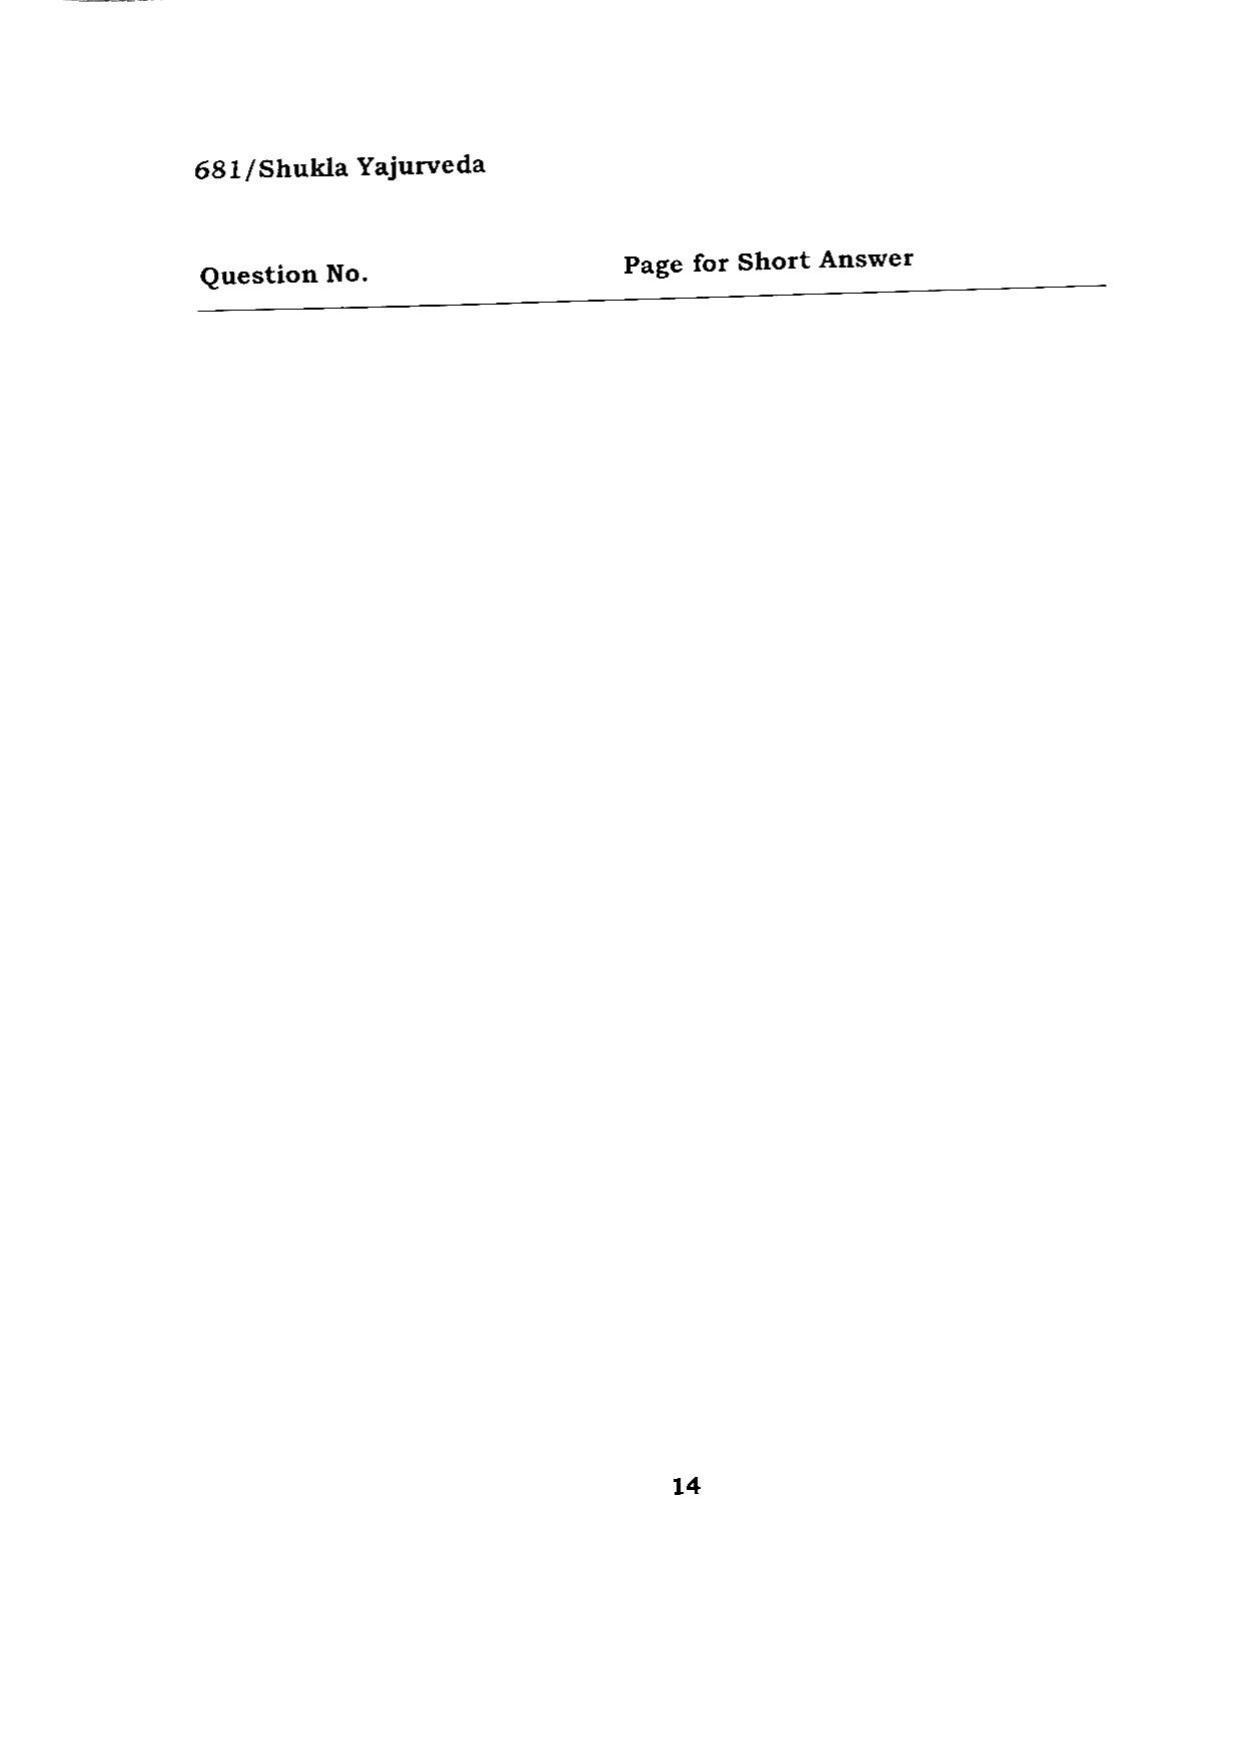 BHU RET SHUKLA YAJURVEDA 2015 Question Paper - Page 14